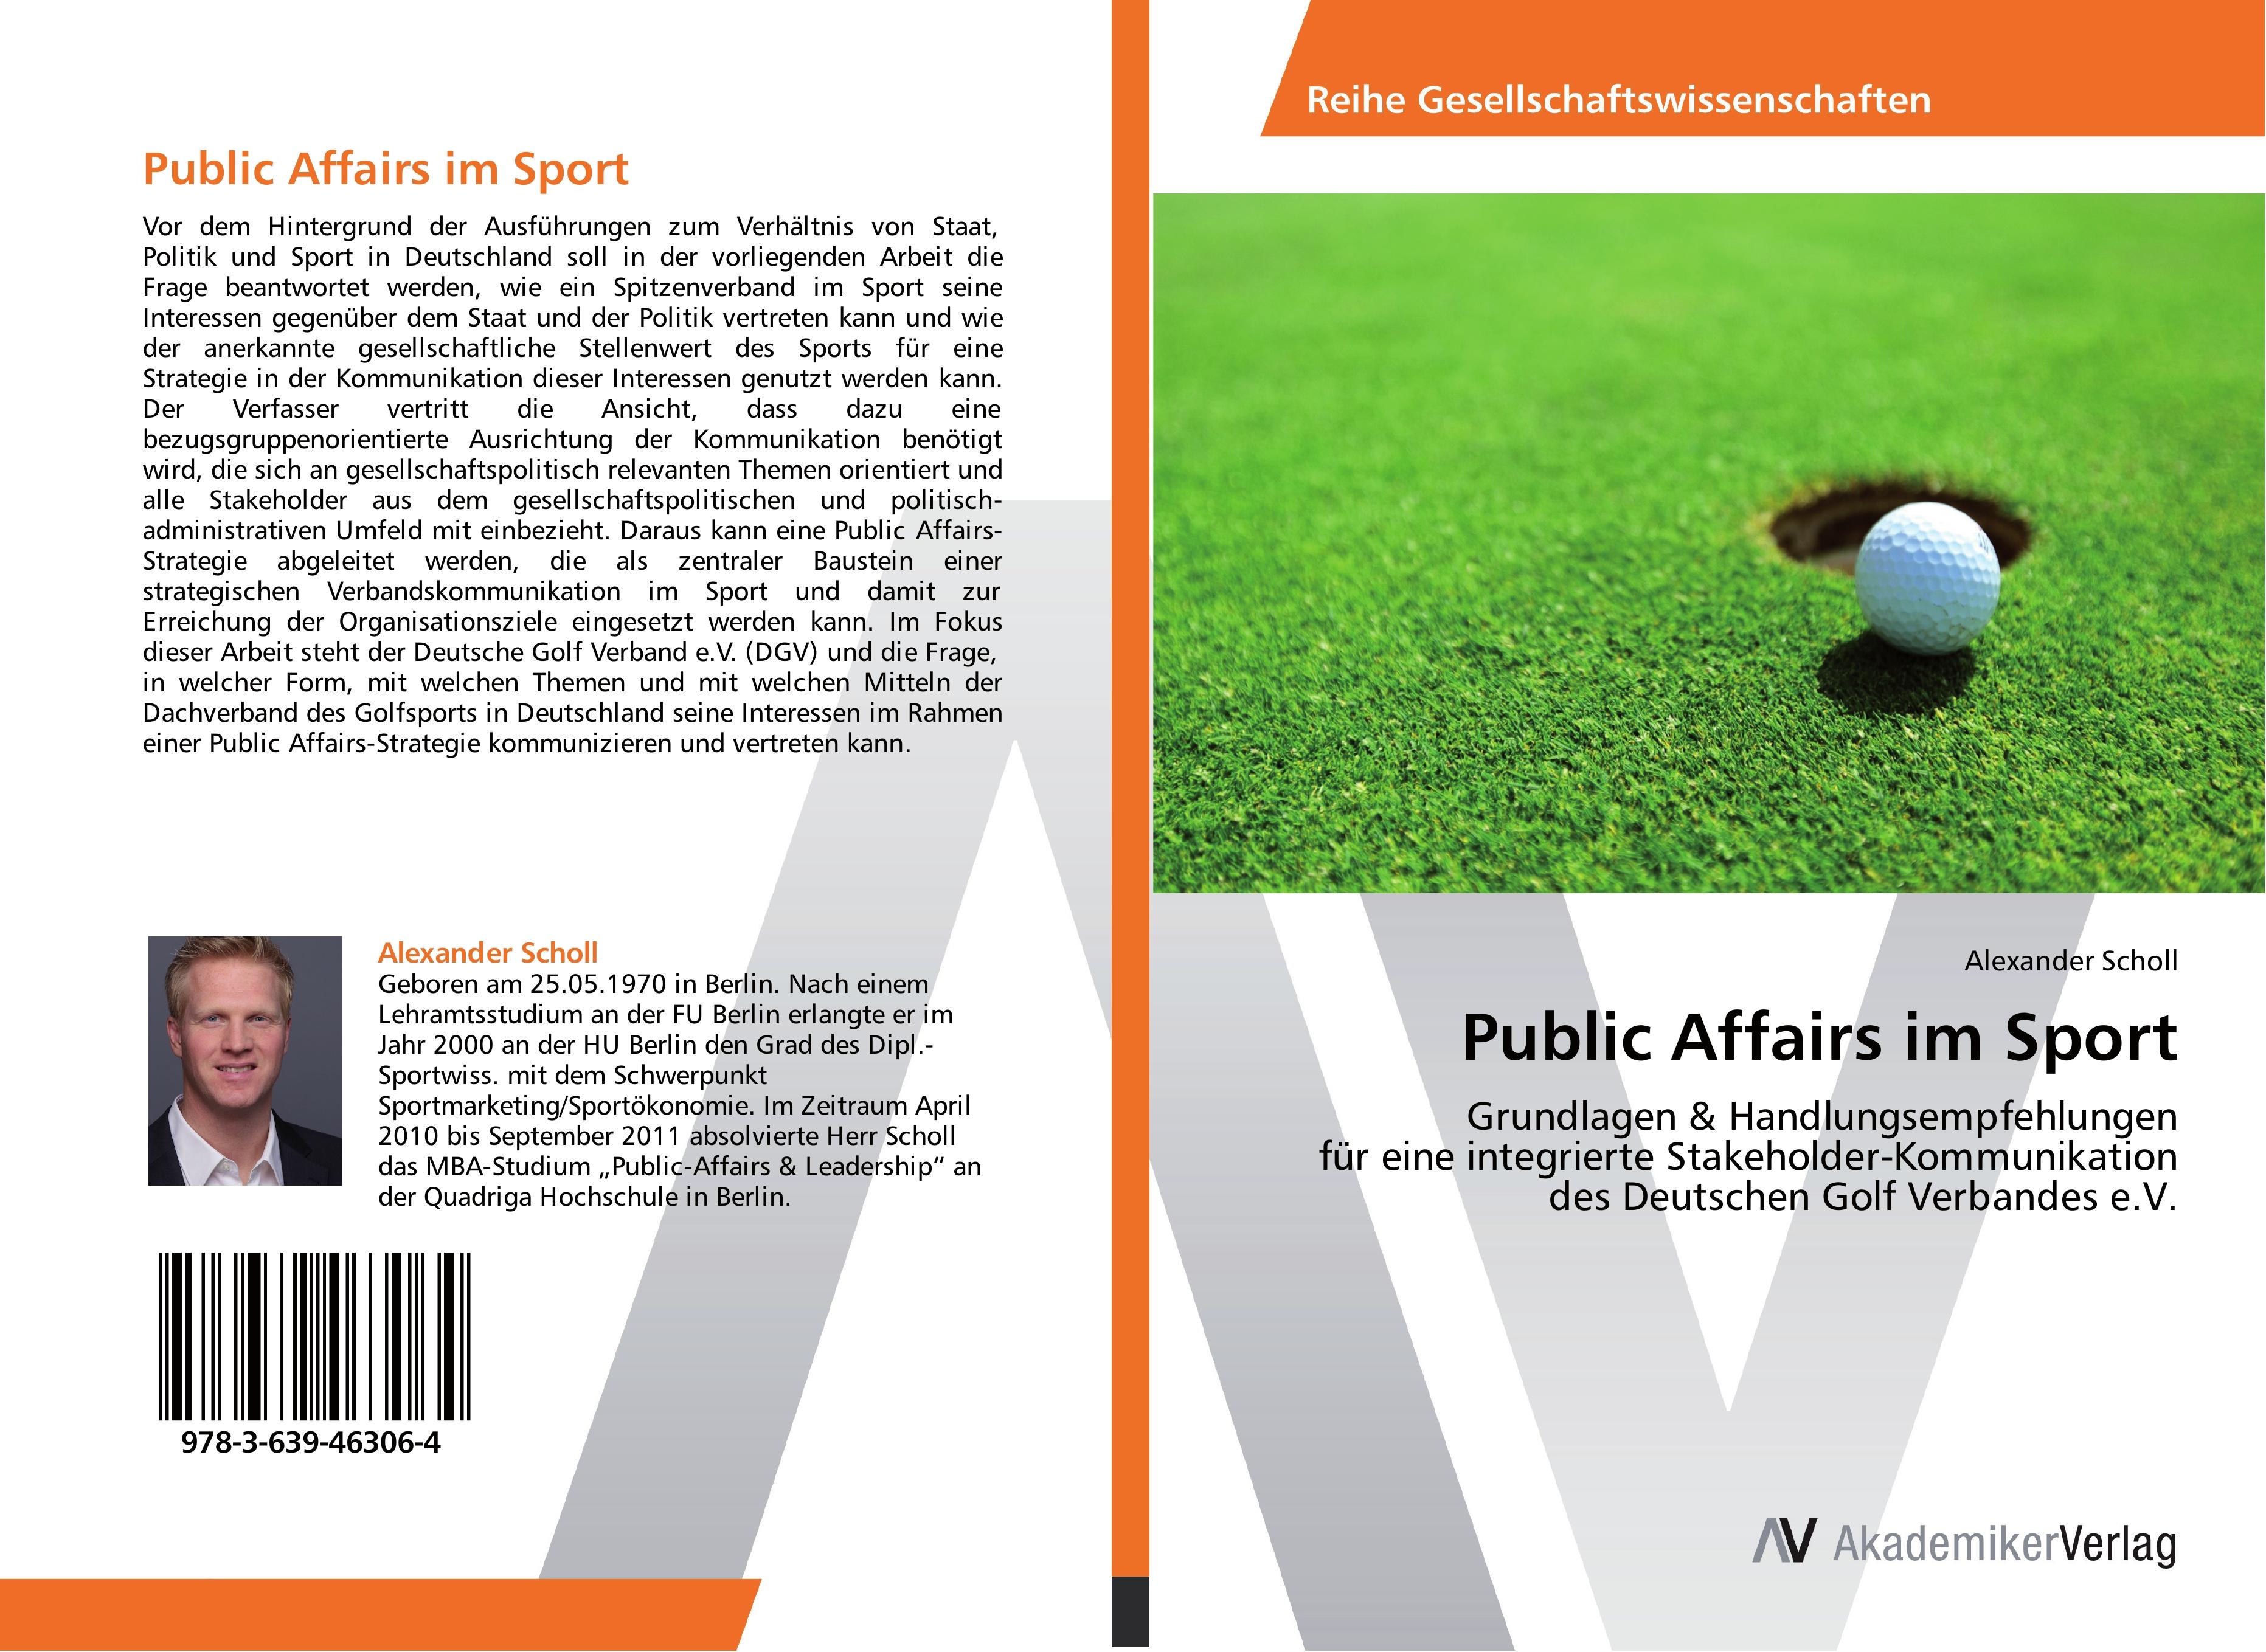 Public Affairs im Sport - Alexander Scholl